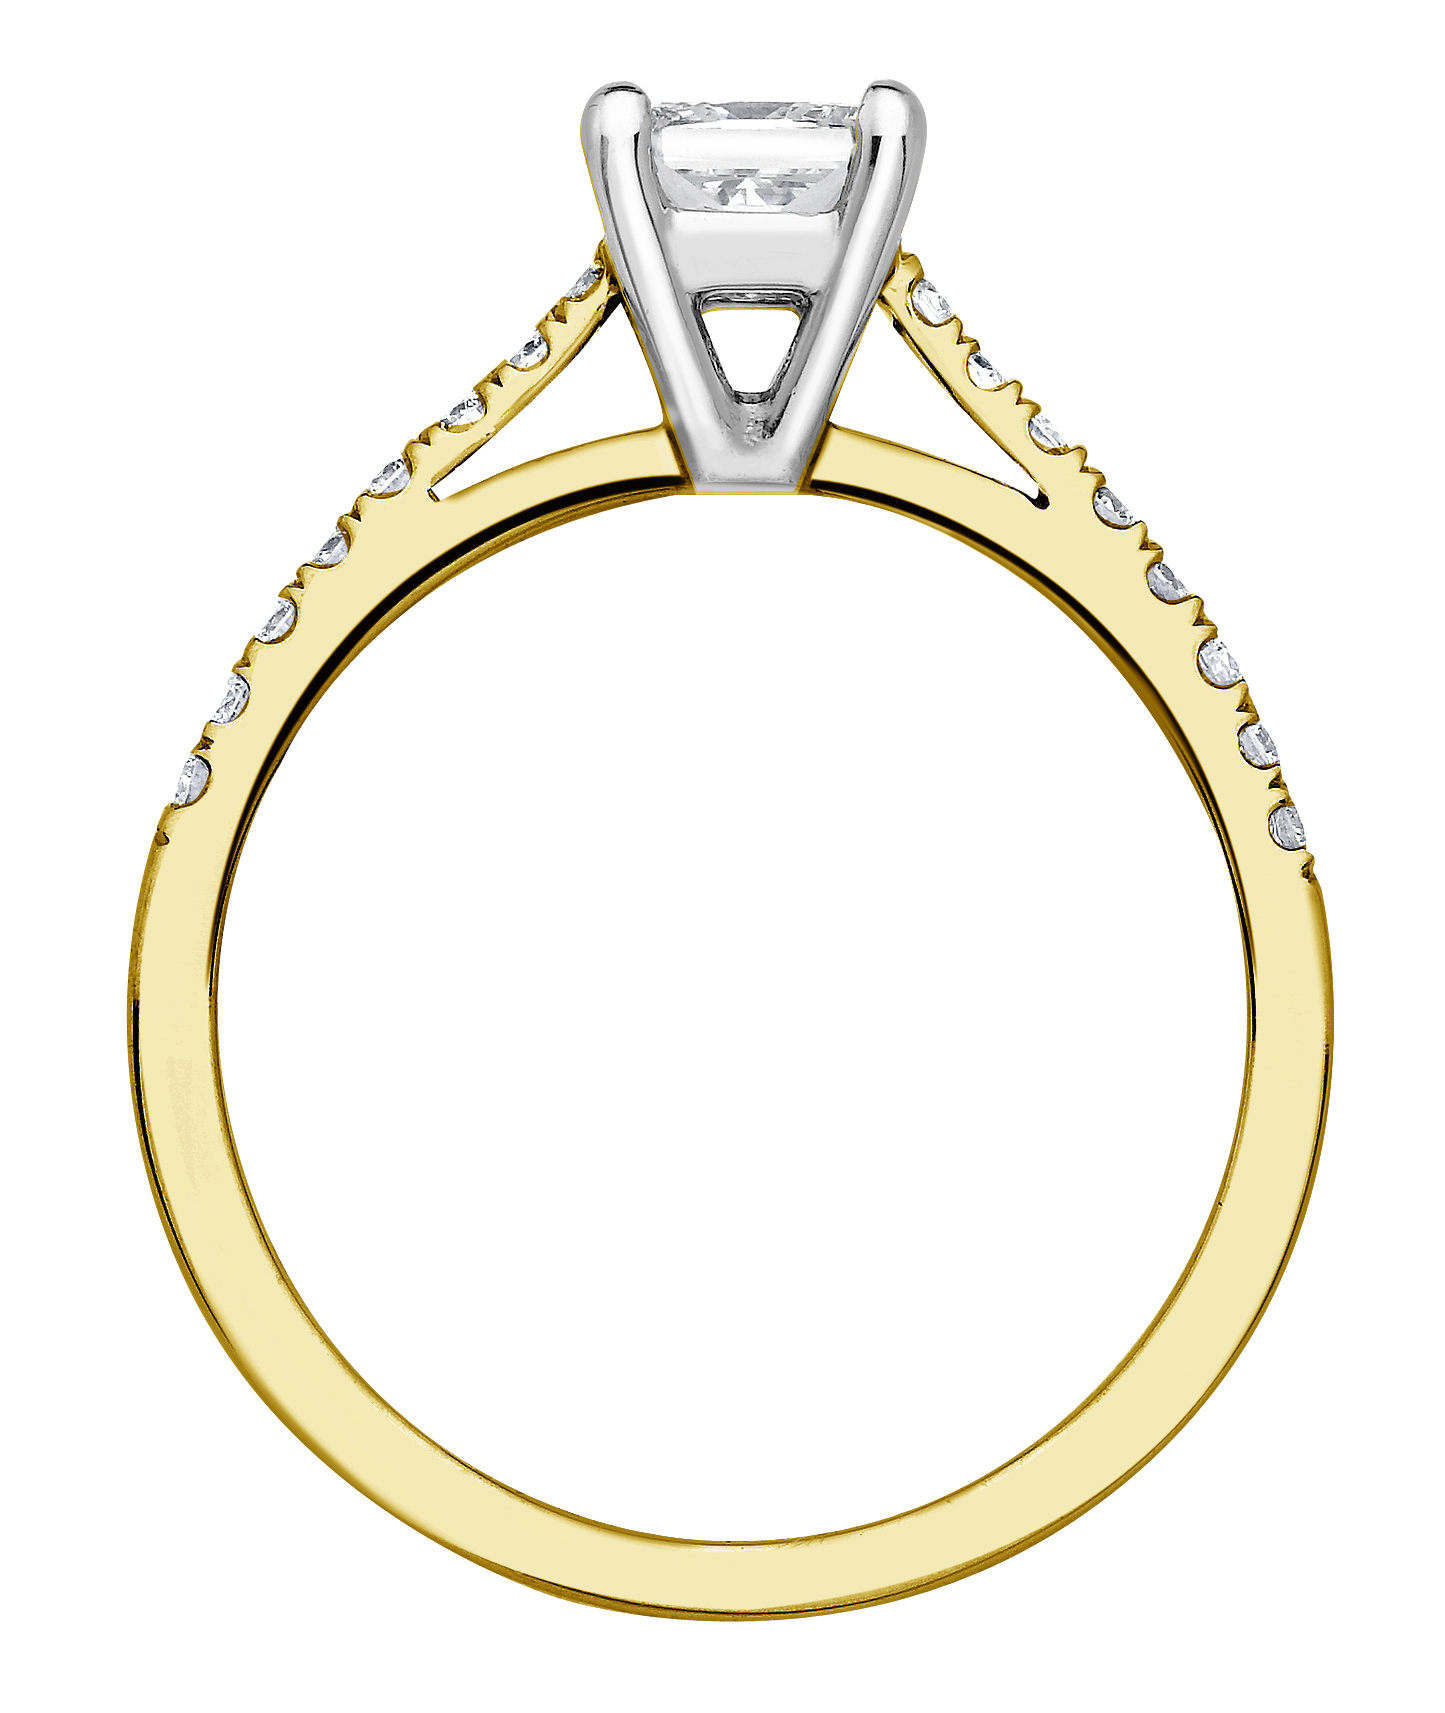 Princess Cut 4 Claw Yellow Gold Diamond Engagement Ring CRC685YG Image 2